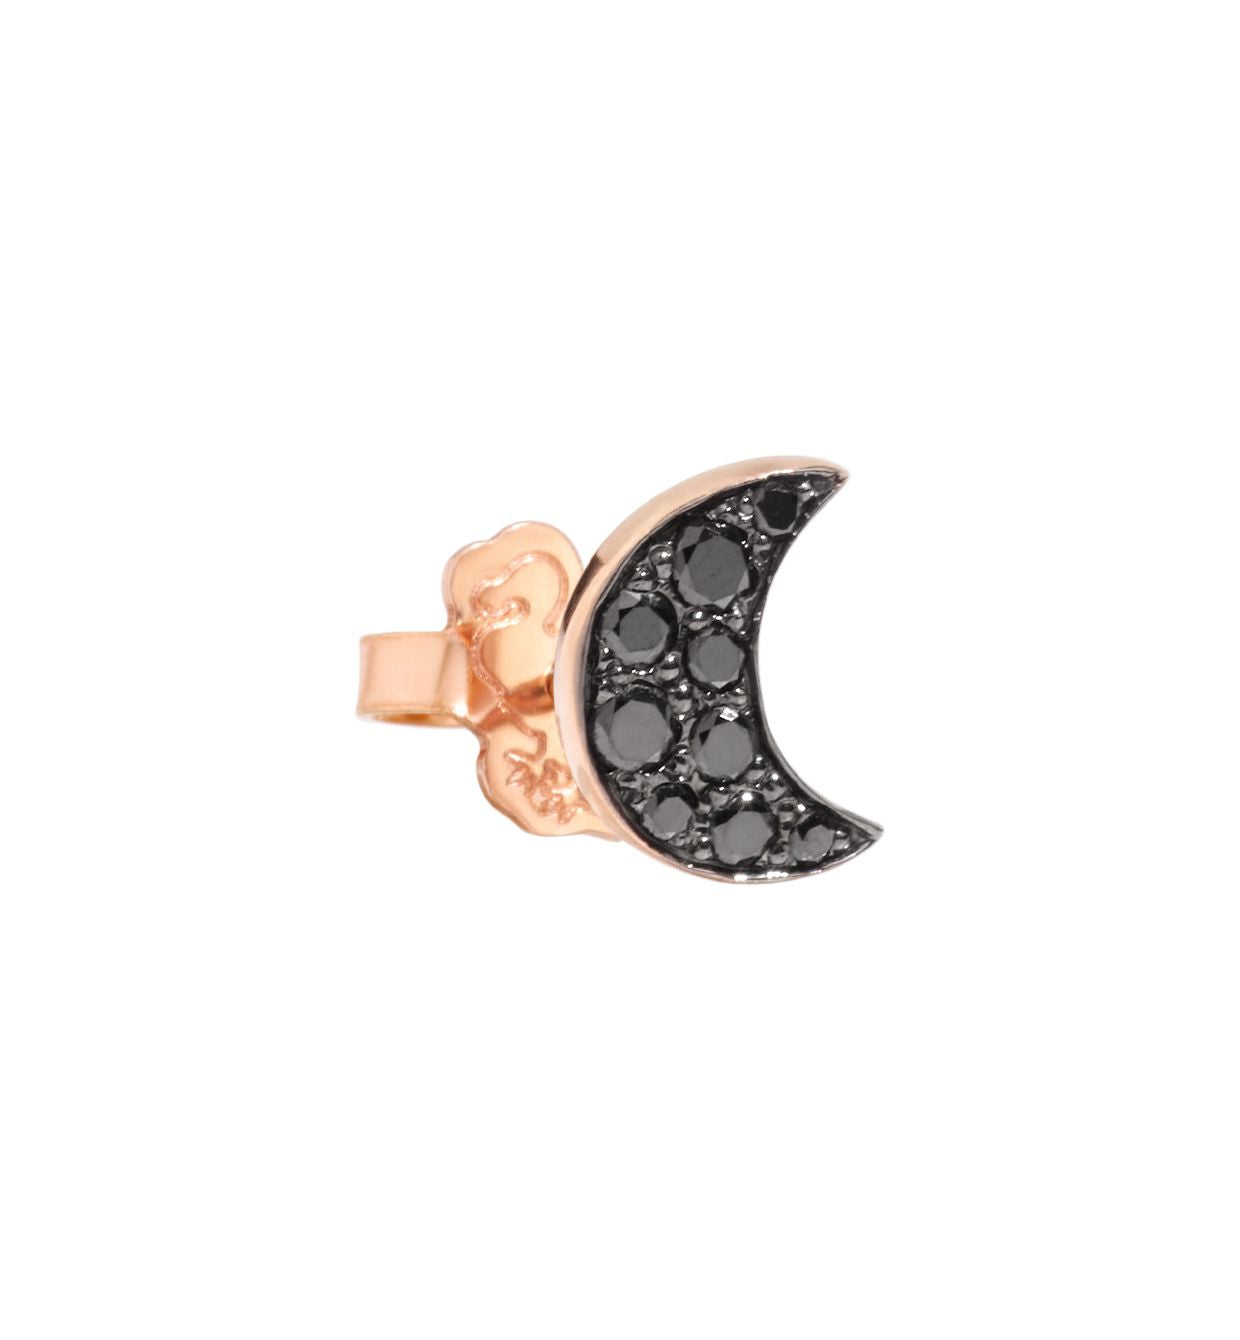 Dodo Moon Earrings in 9k Rose Gold and Black Diamonds - Orsini Jewellers NZ